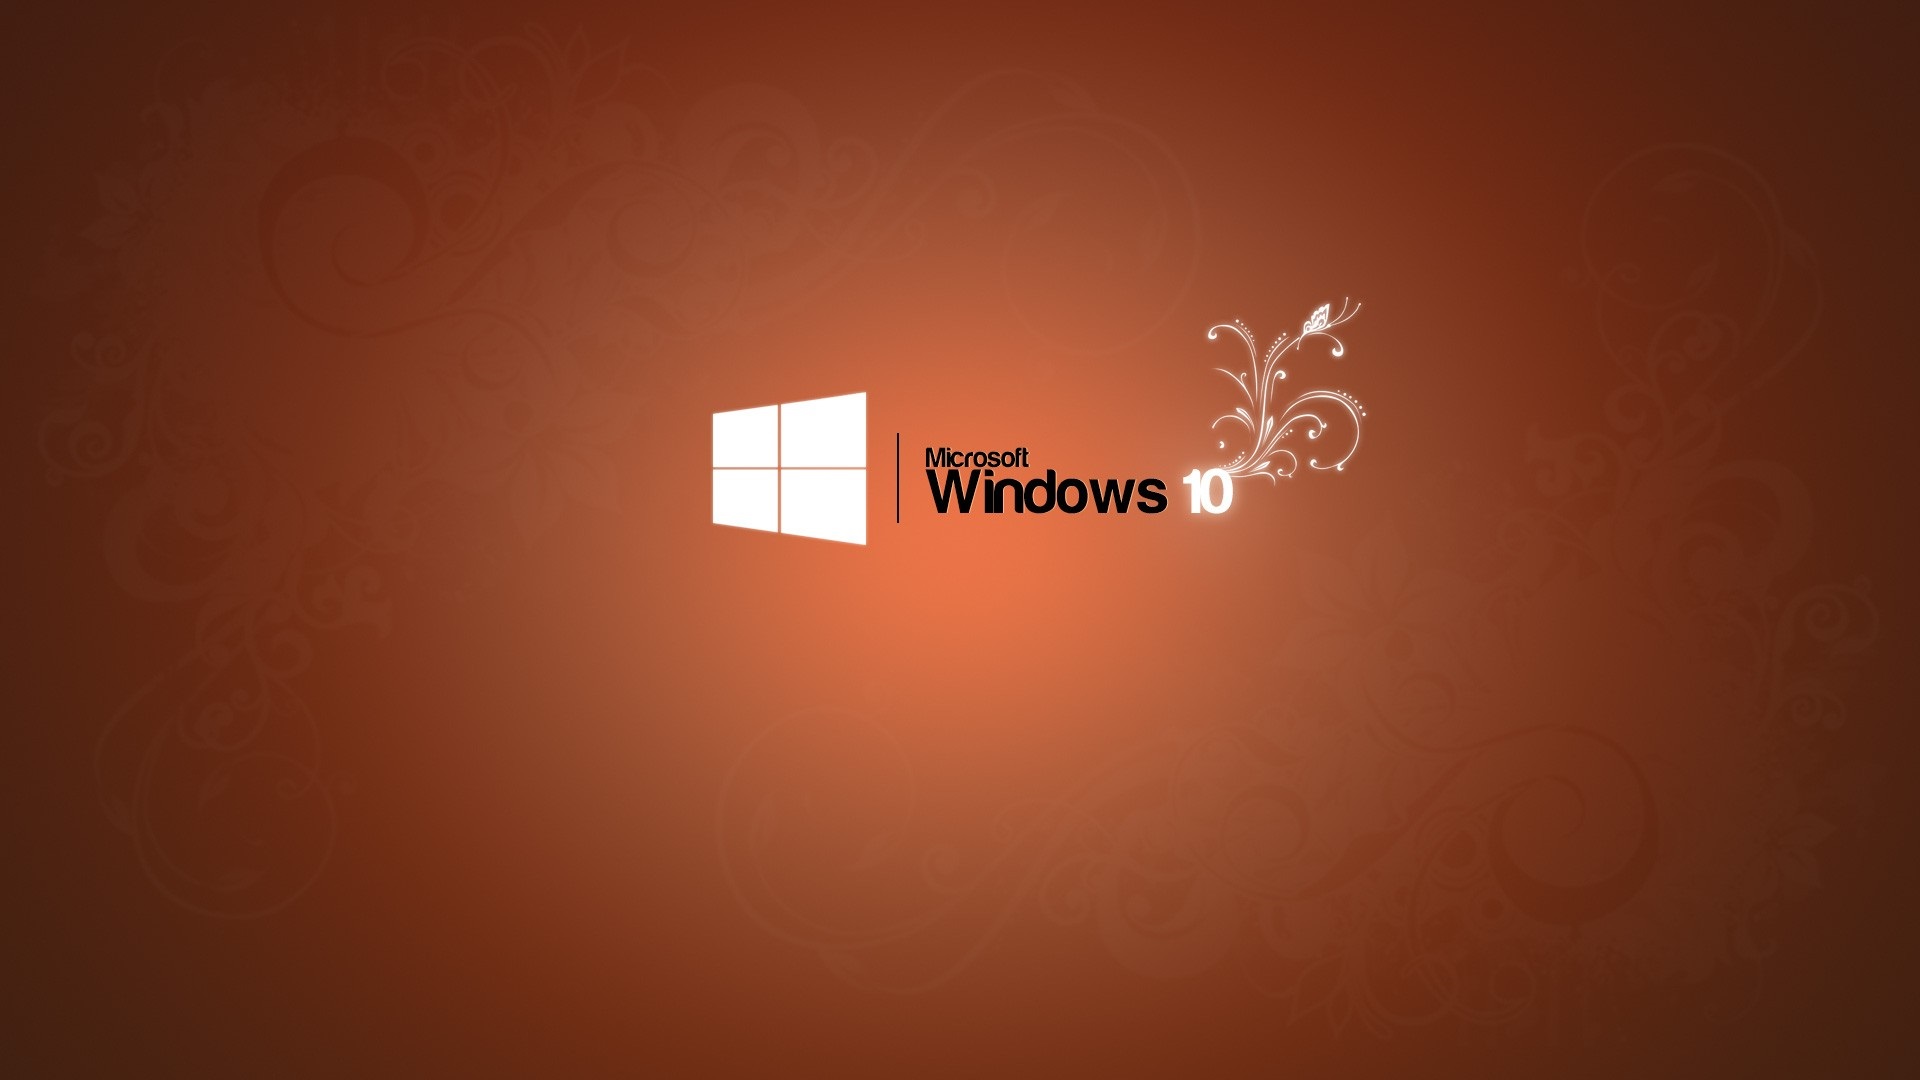 Microsoft Windows Logo Orange Background Wallpaper Brands